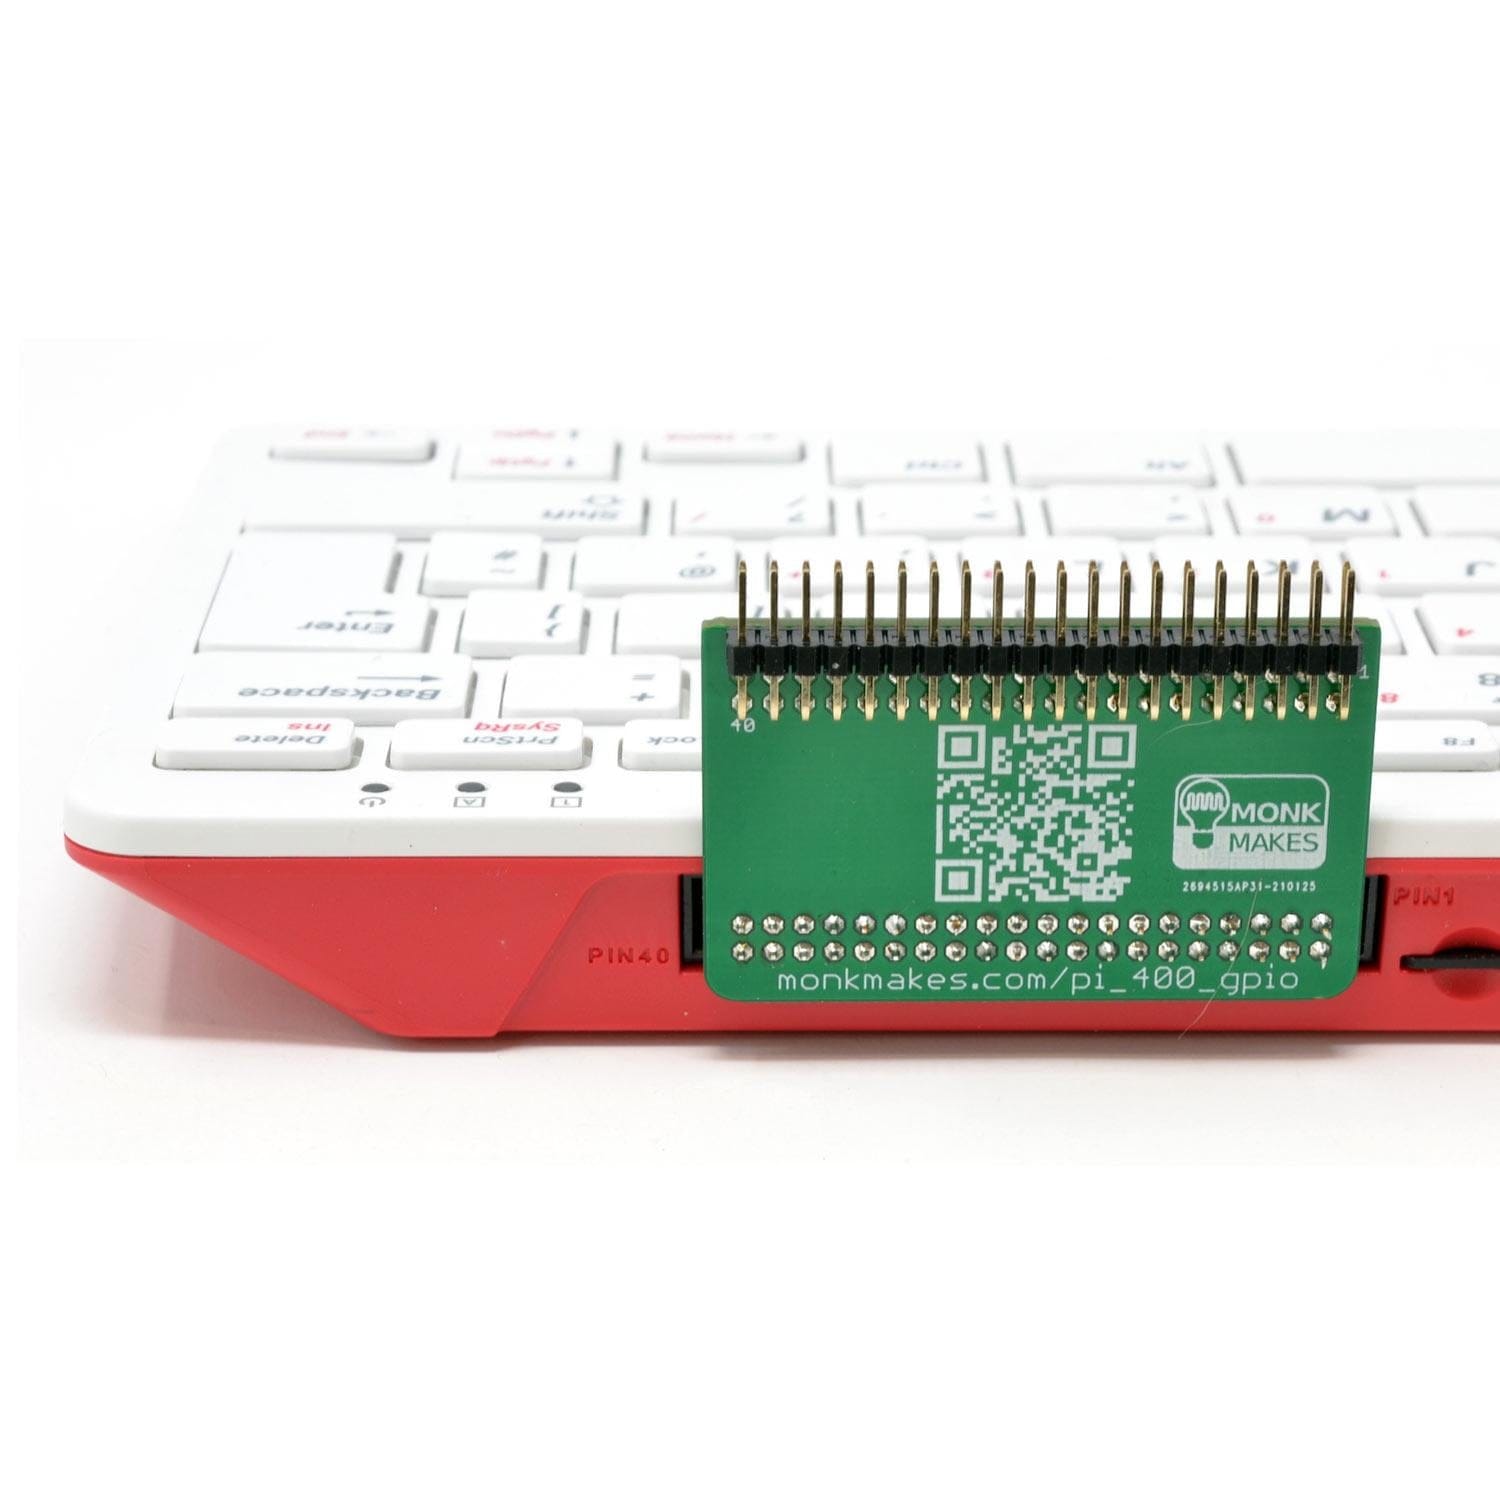 GPIO Adapter for Raspberry Pi 400 - The Pi Hut